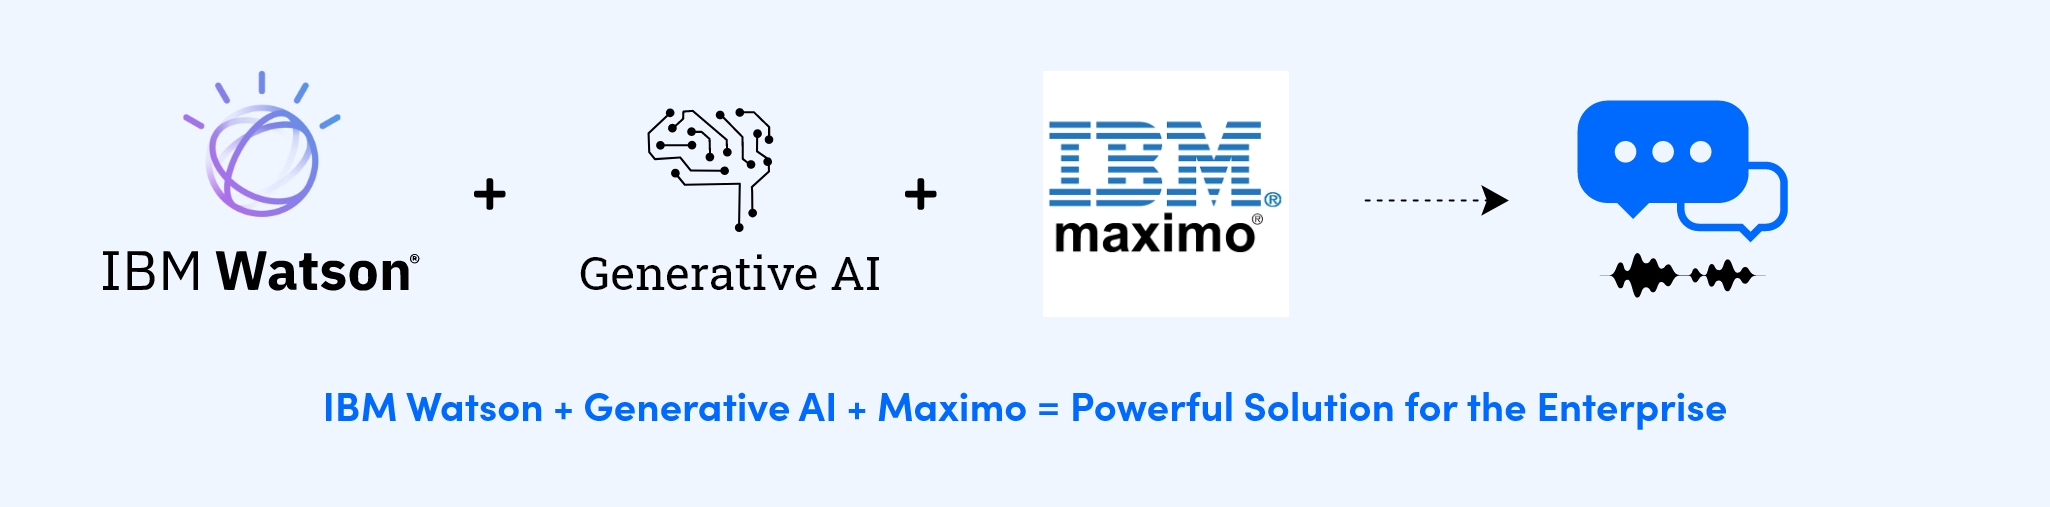 IBM-Maximo-Generative-AI